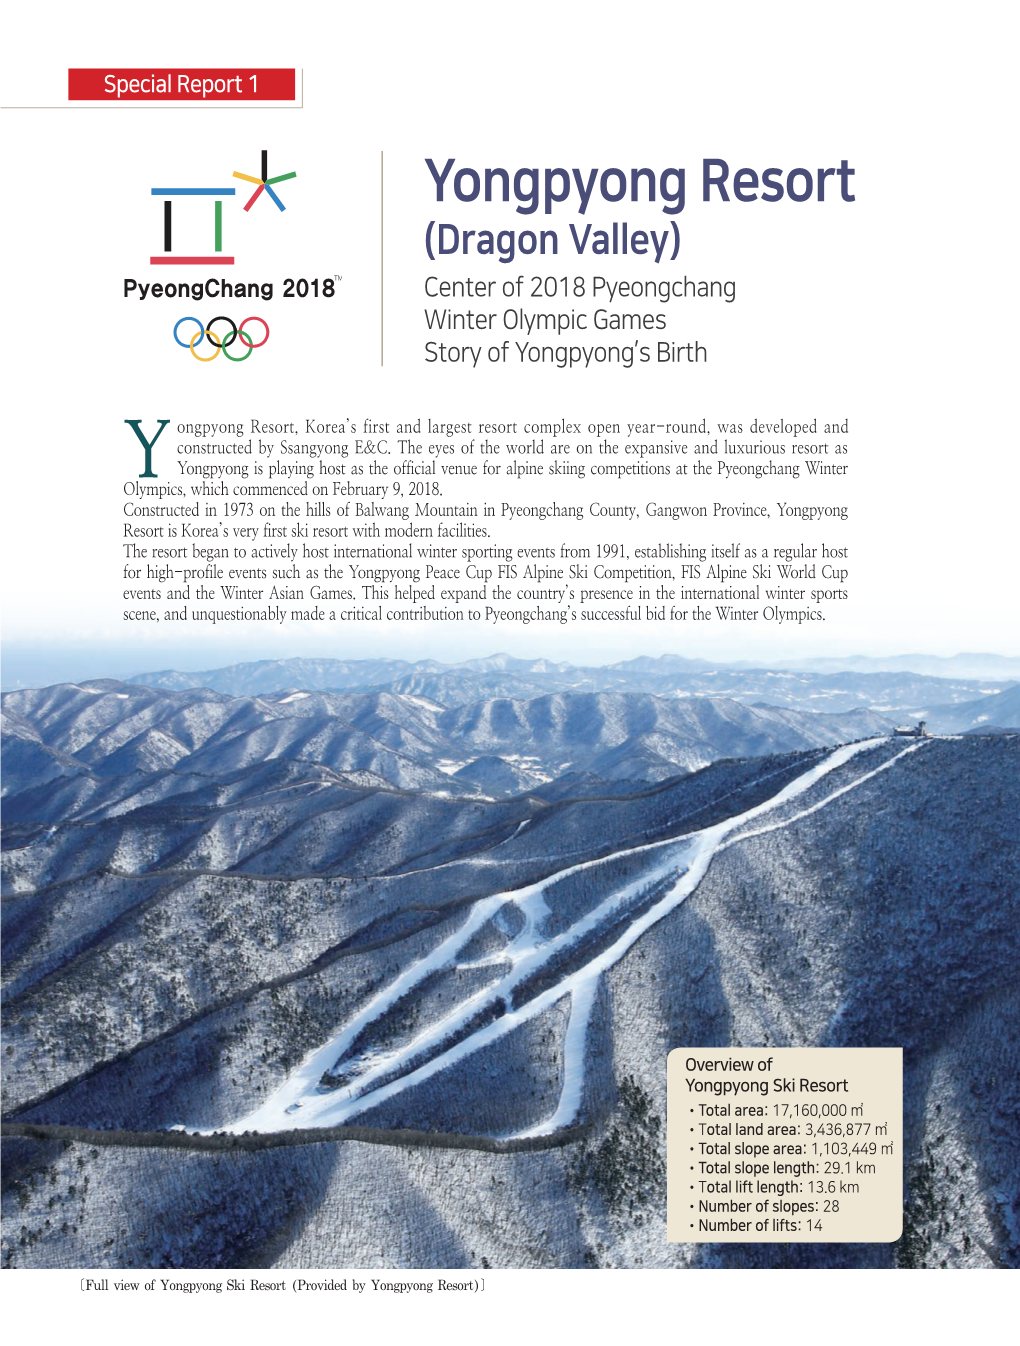 Yongpyong Resort (Dragon Valley) Center of 2018 Pyeongchang Winter Olympic Games Story of Yongpyong’S Birth